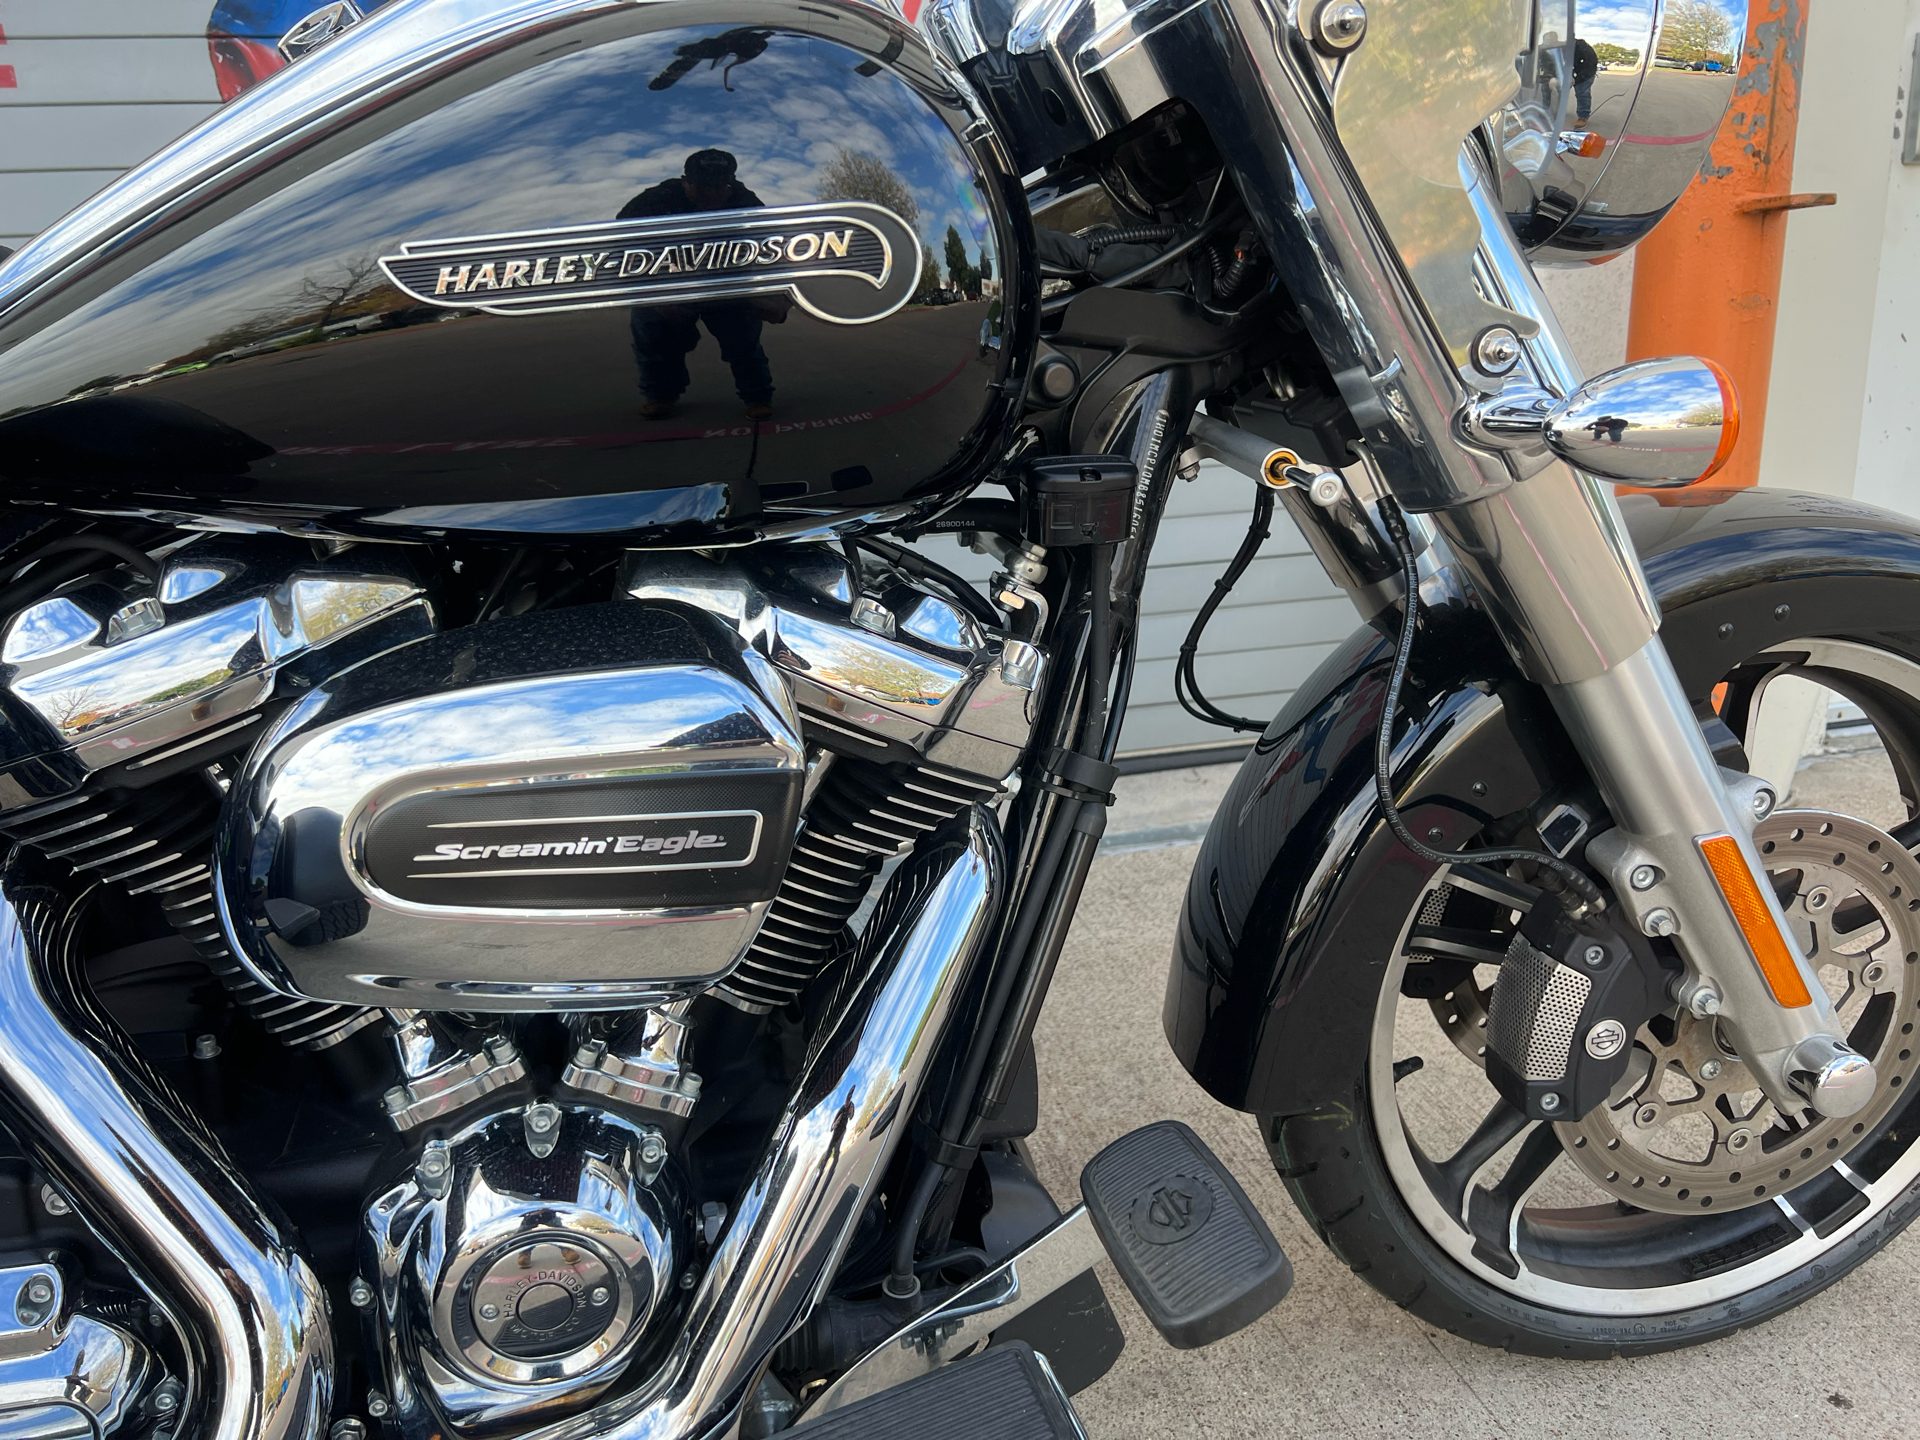 2021 Harley-Davidson Freewheeler® in Grand Prairie, Texas - Photo 2